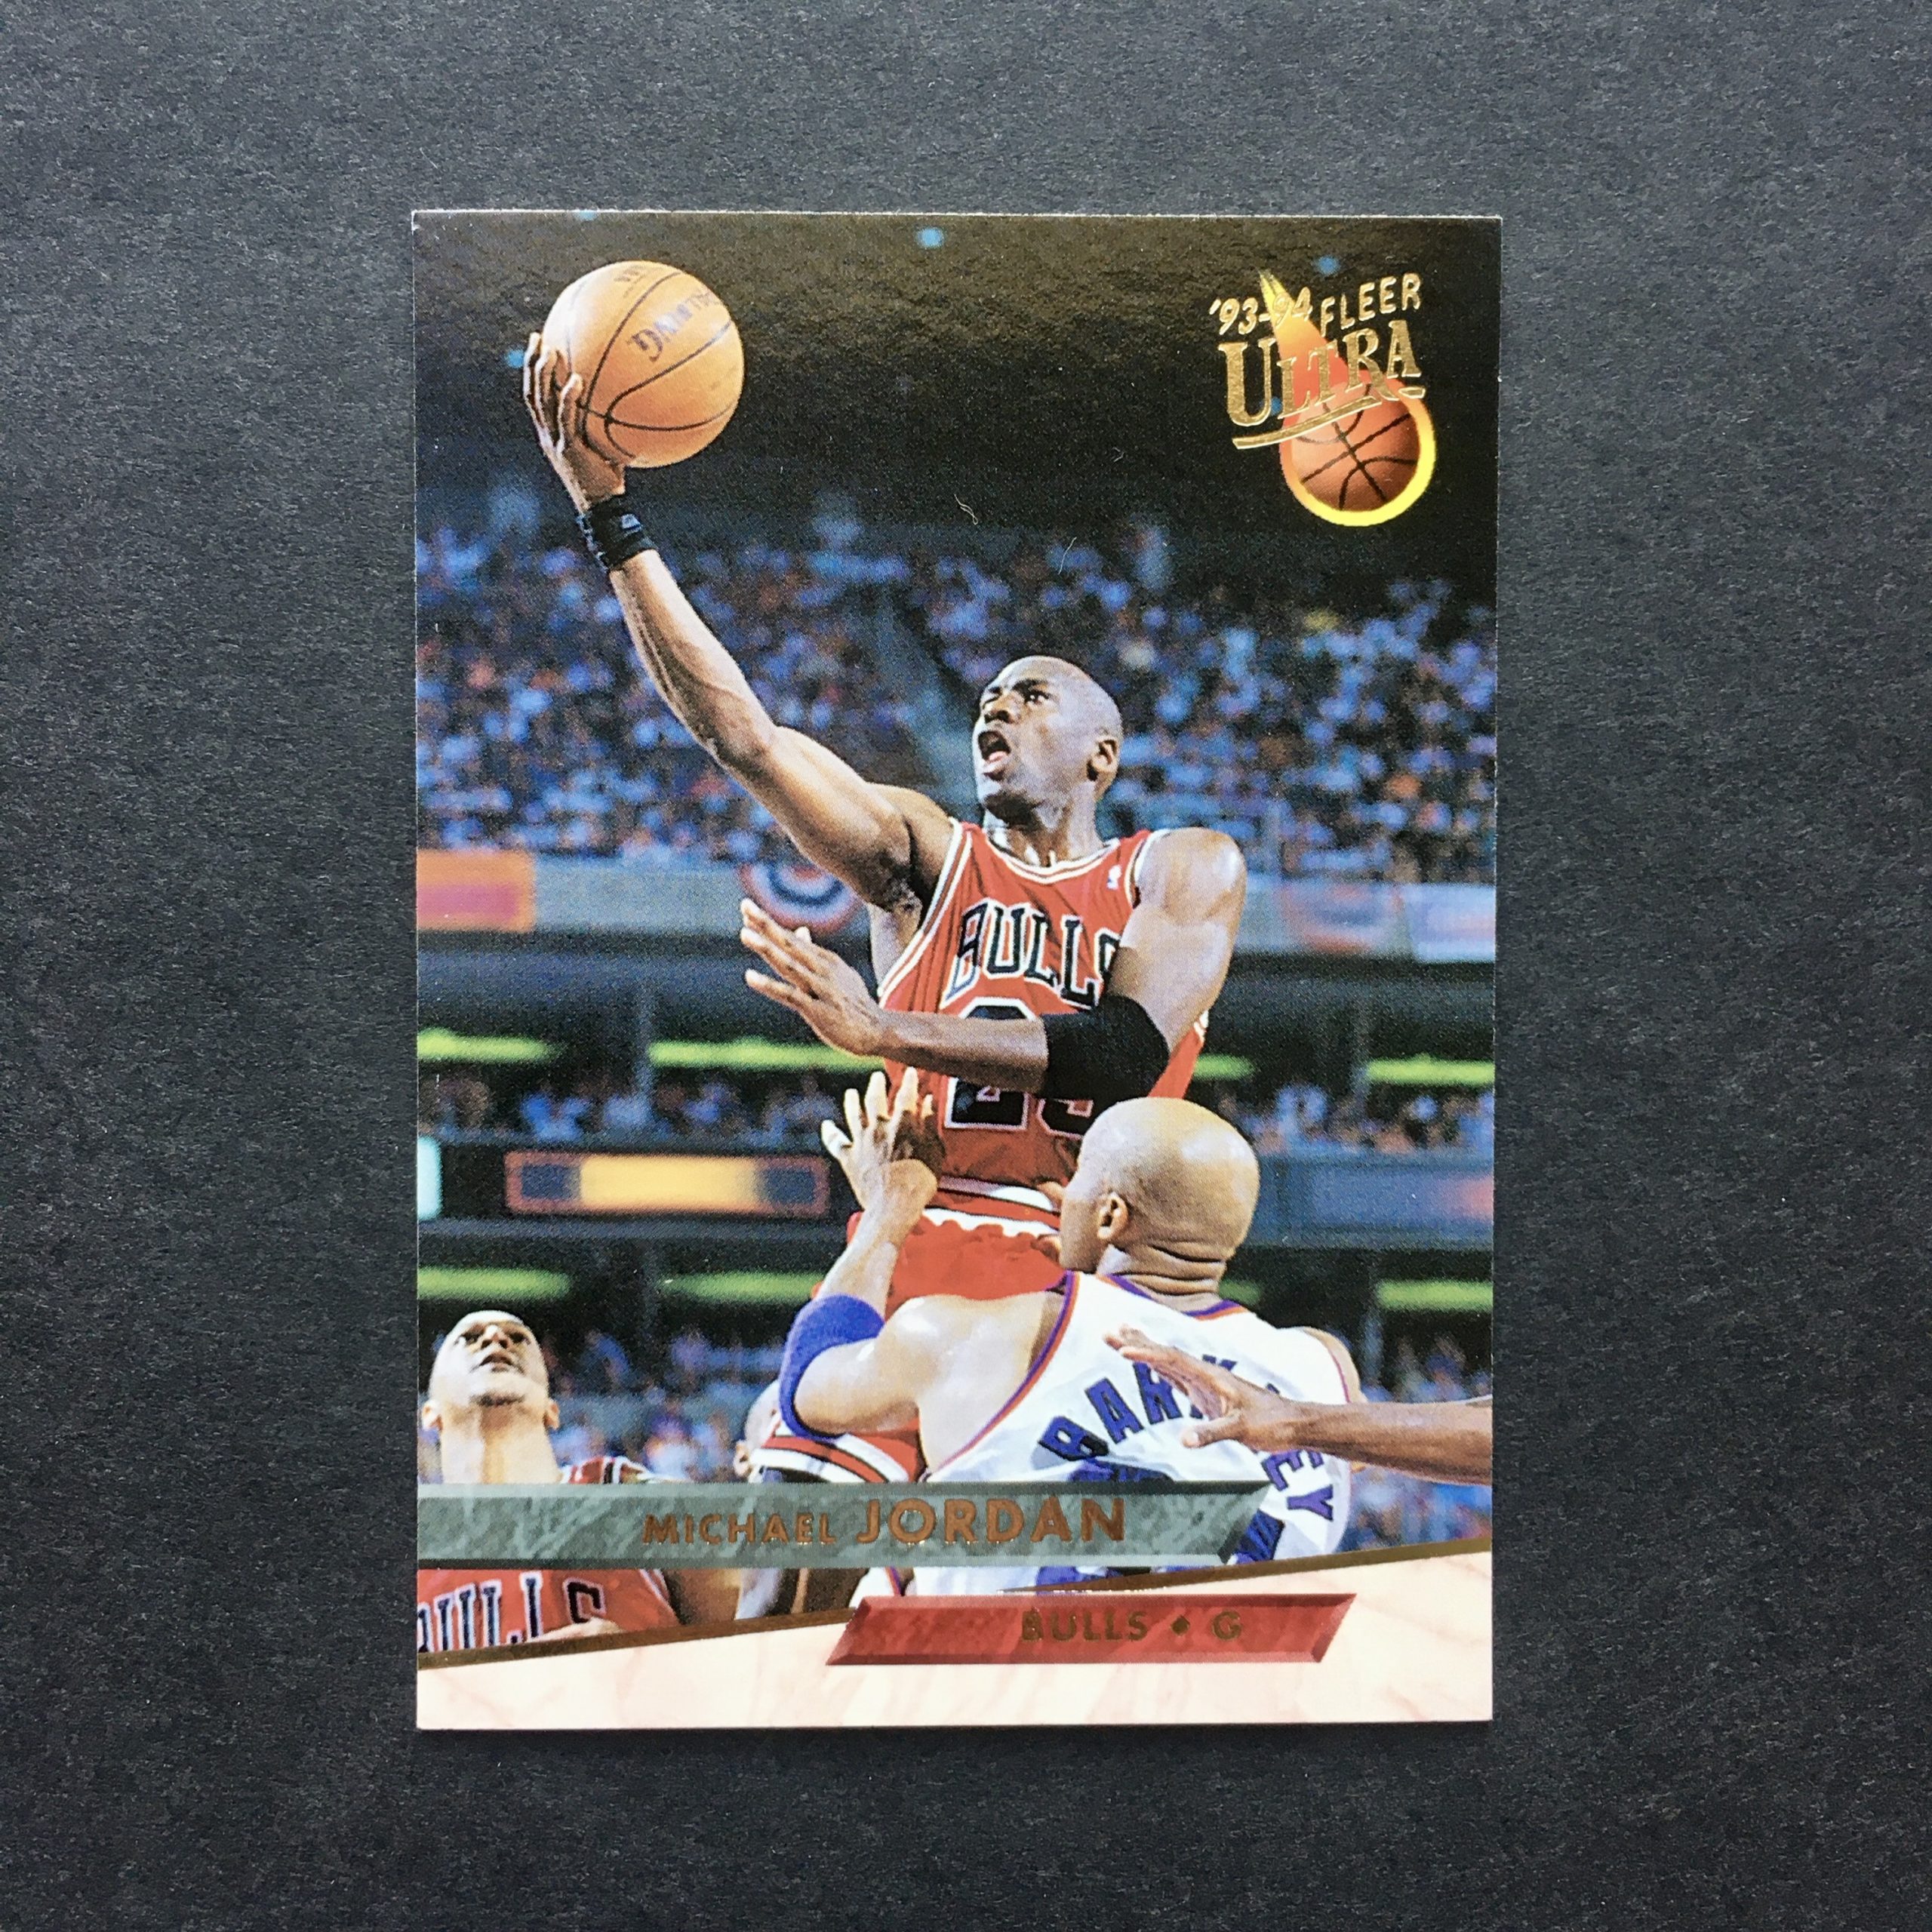 Michael Jordan Fleer Ultra Card